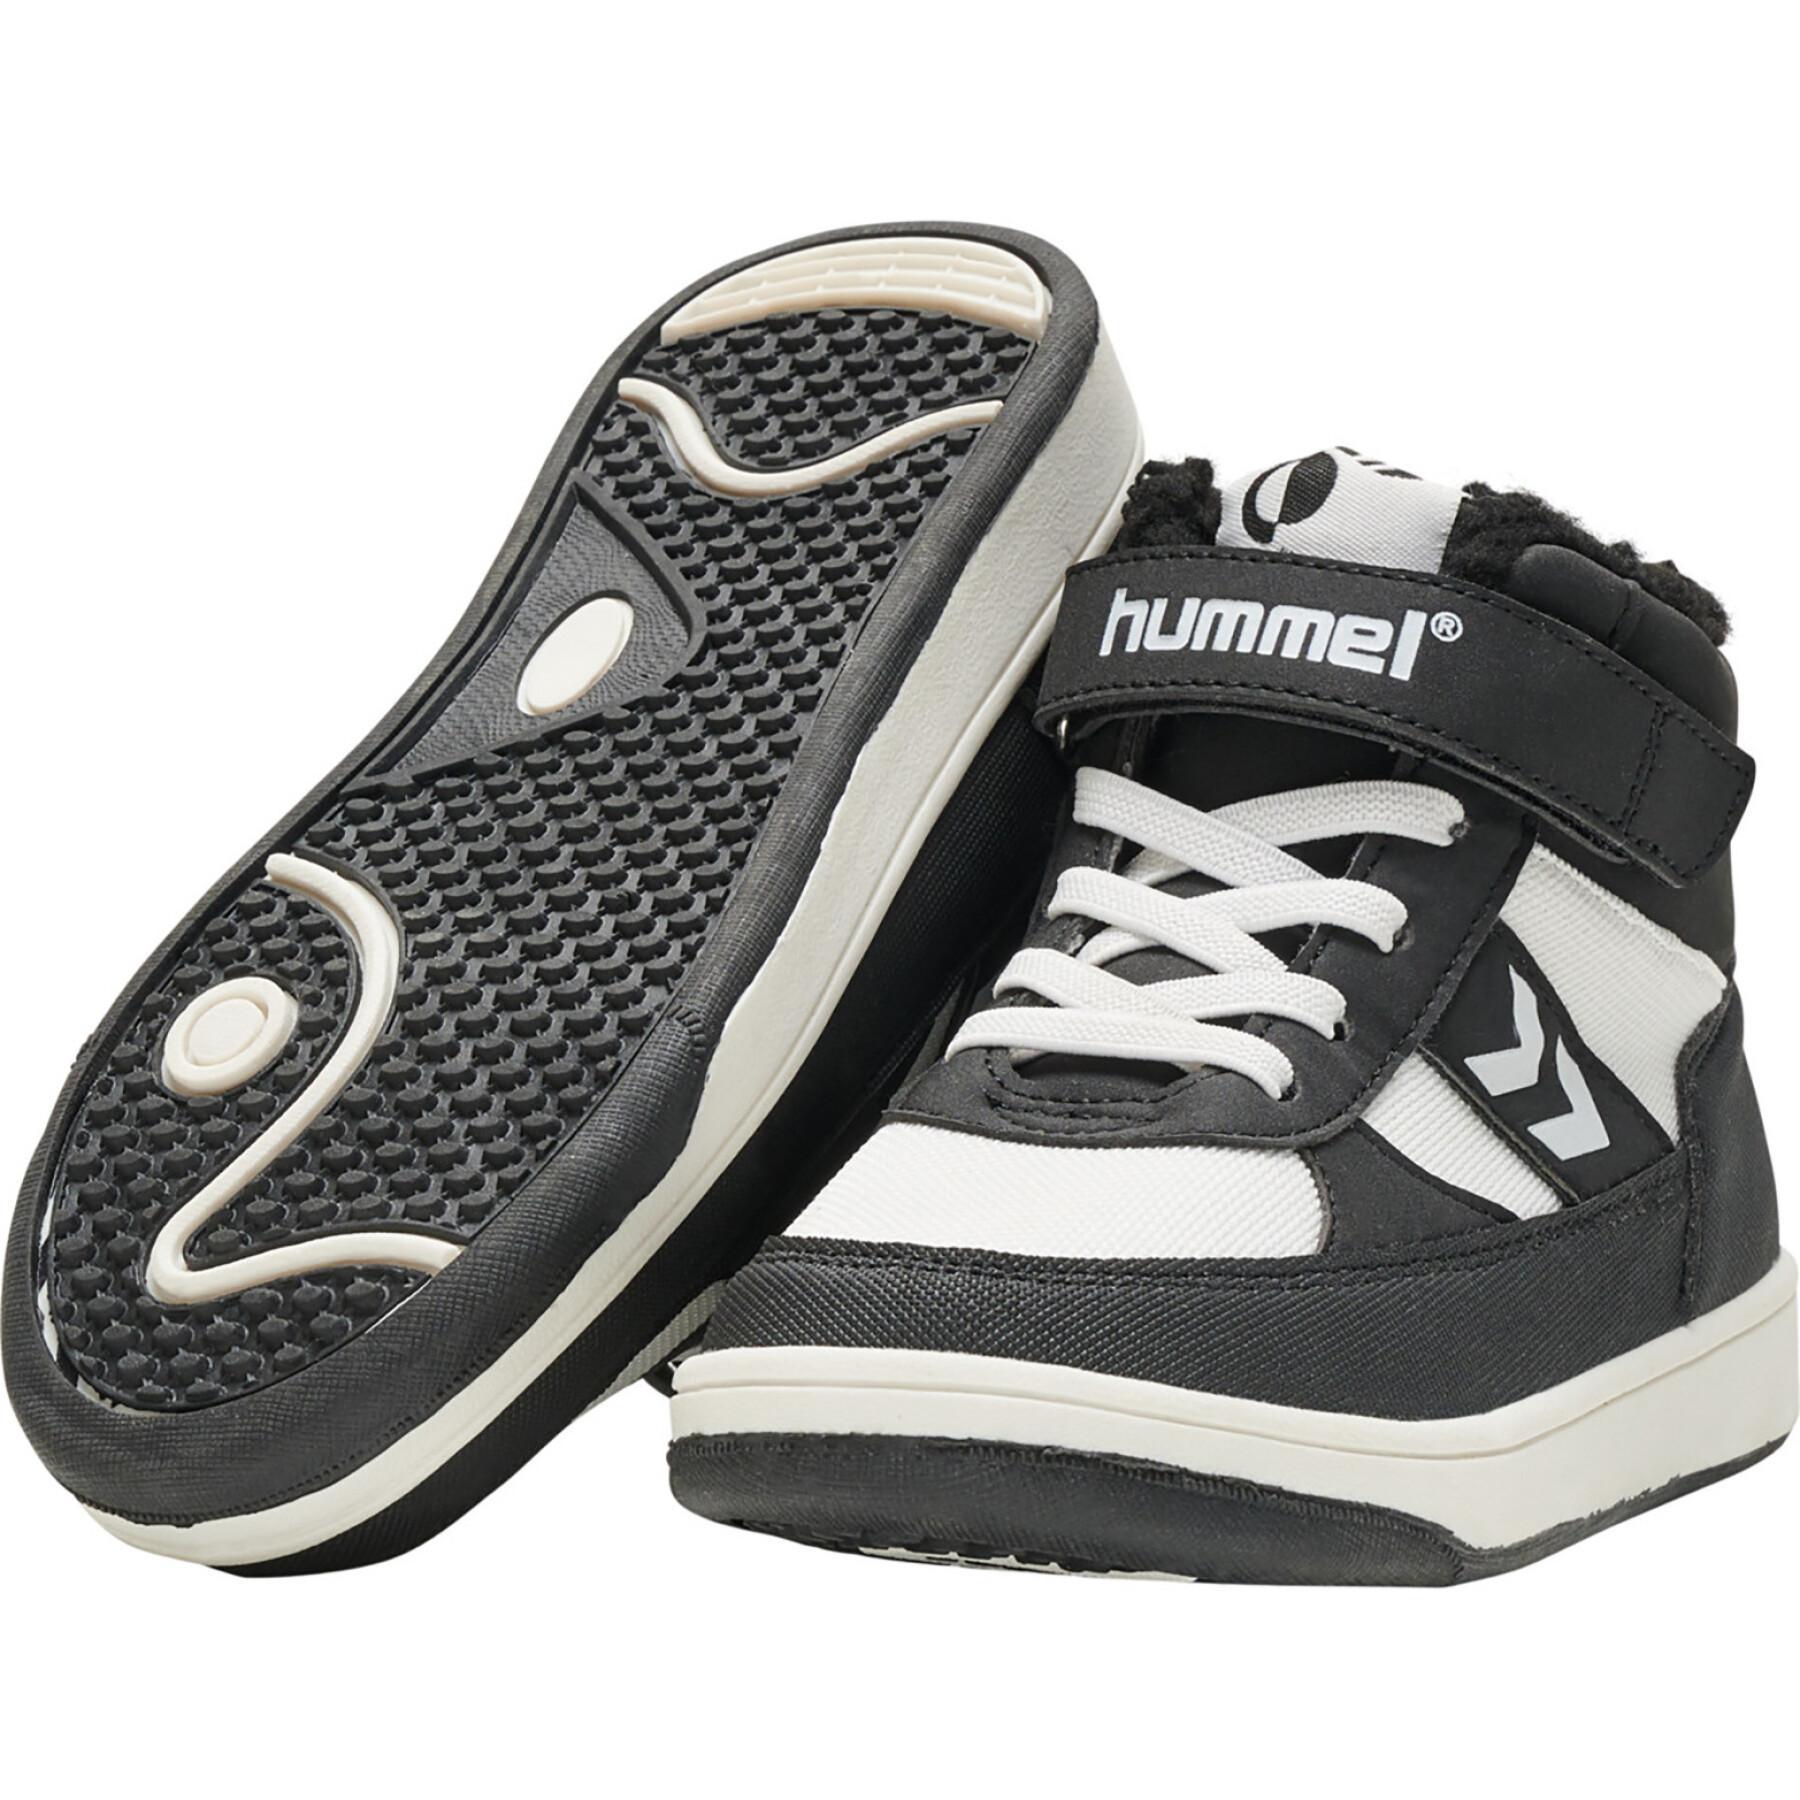 Children's shoes Hummel zap